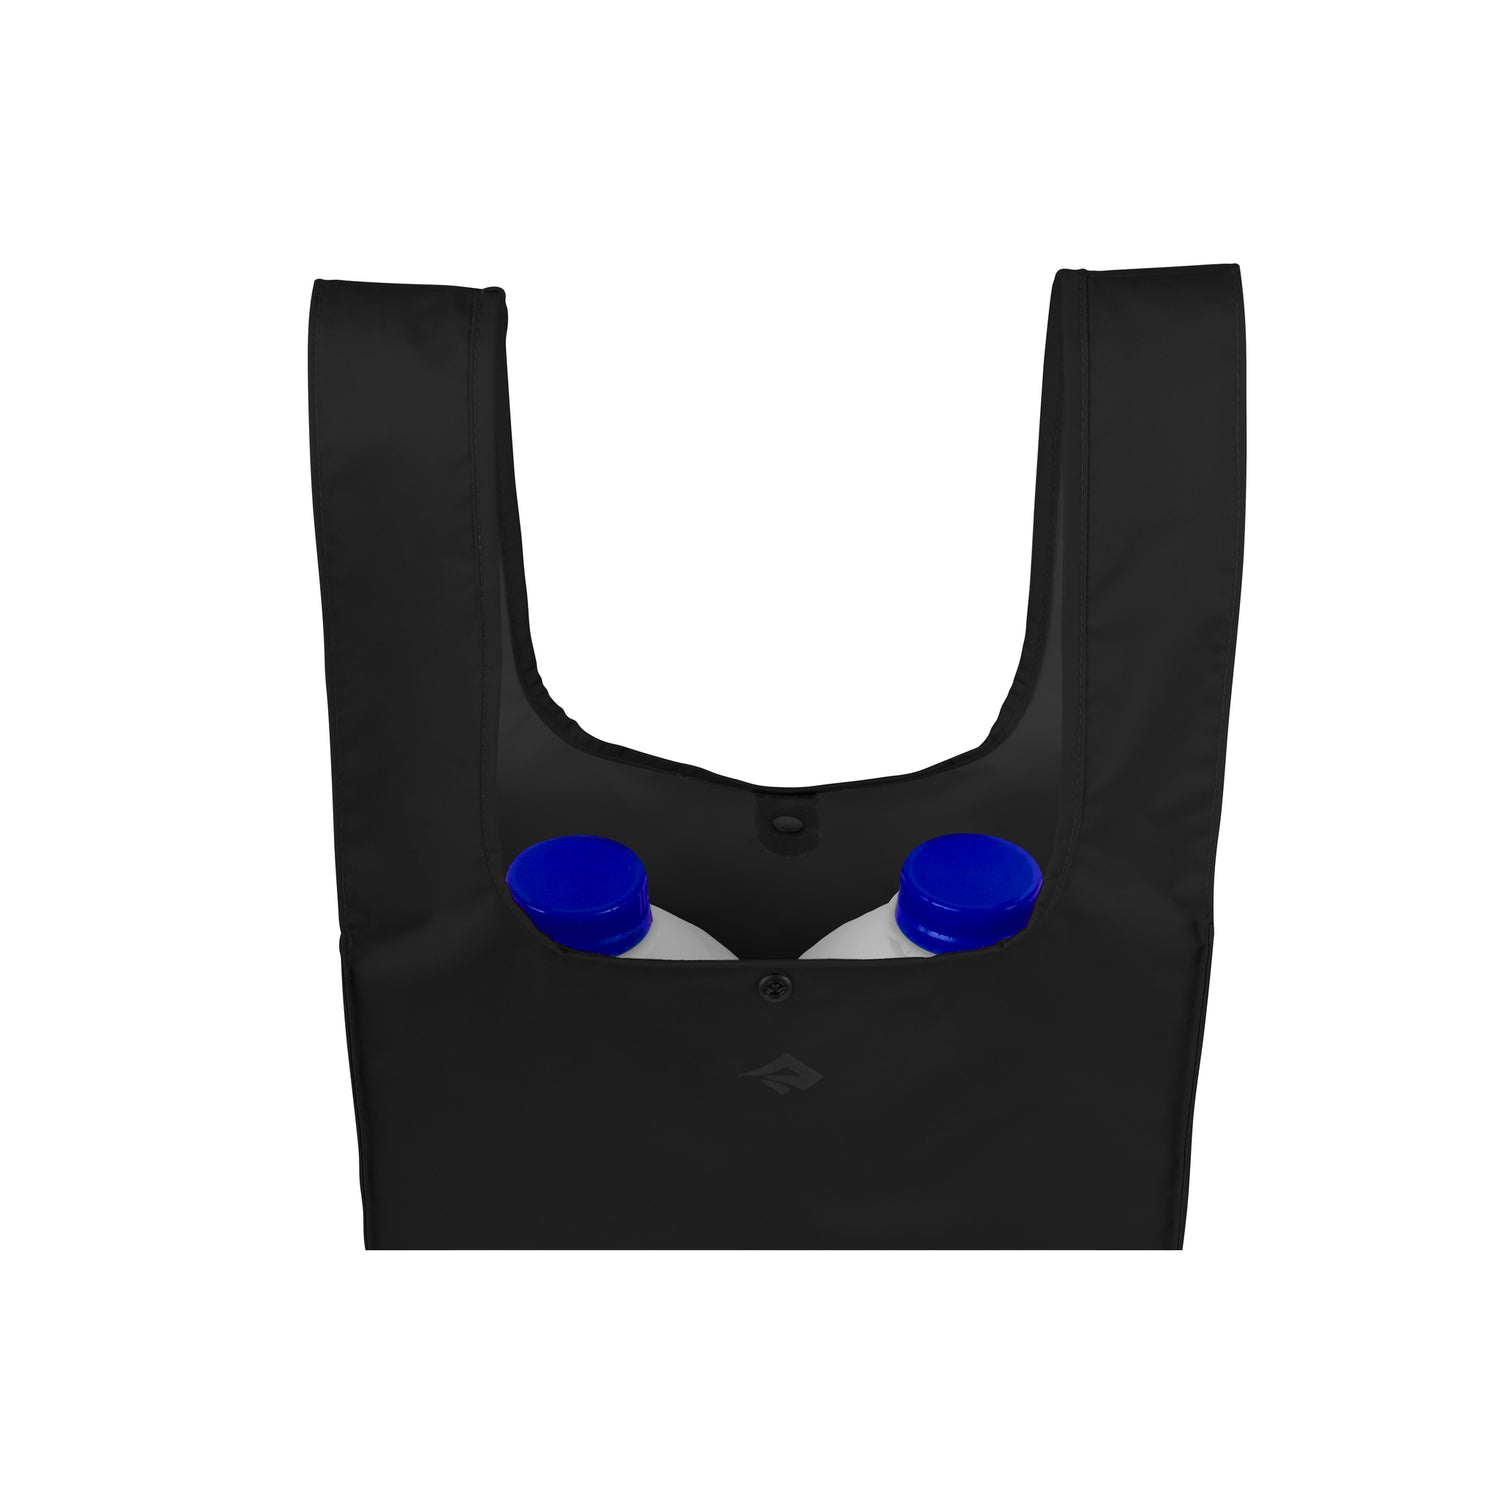 Black || Fold Flat Pocket Shopping Bag